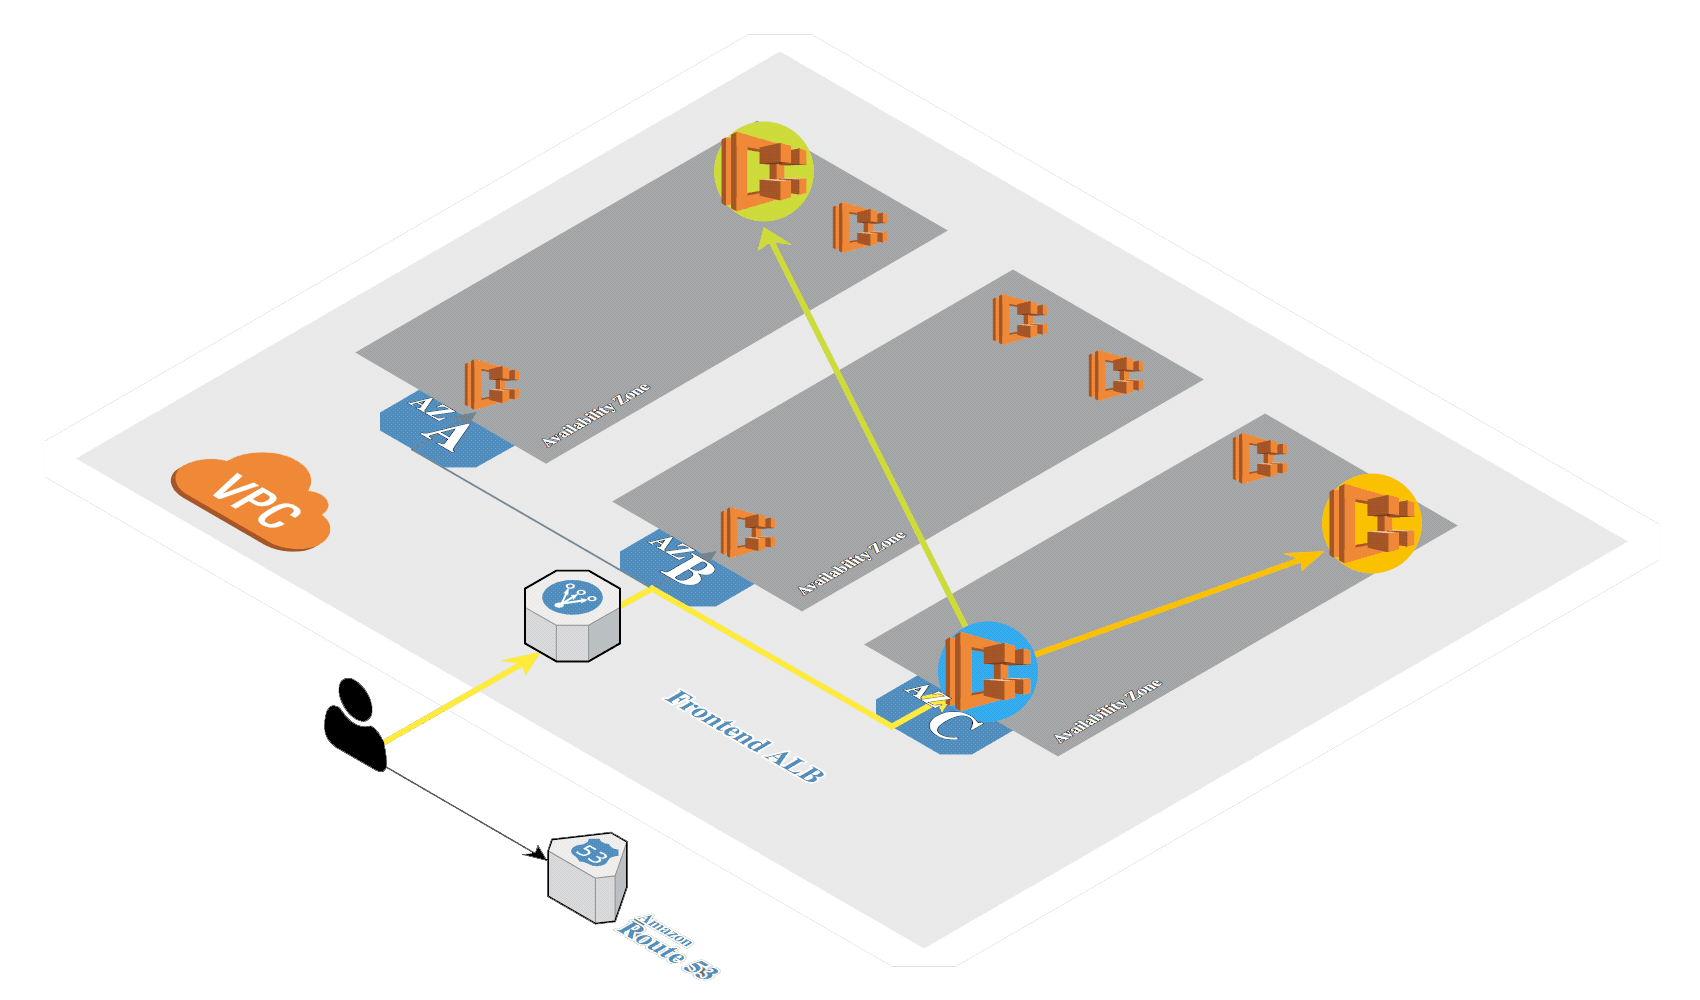 AWS Service: Amazon Elastic Container Service